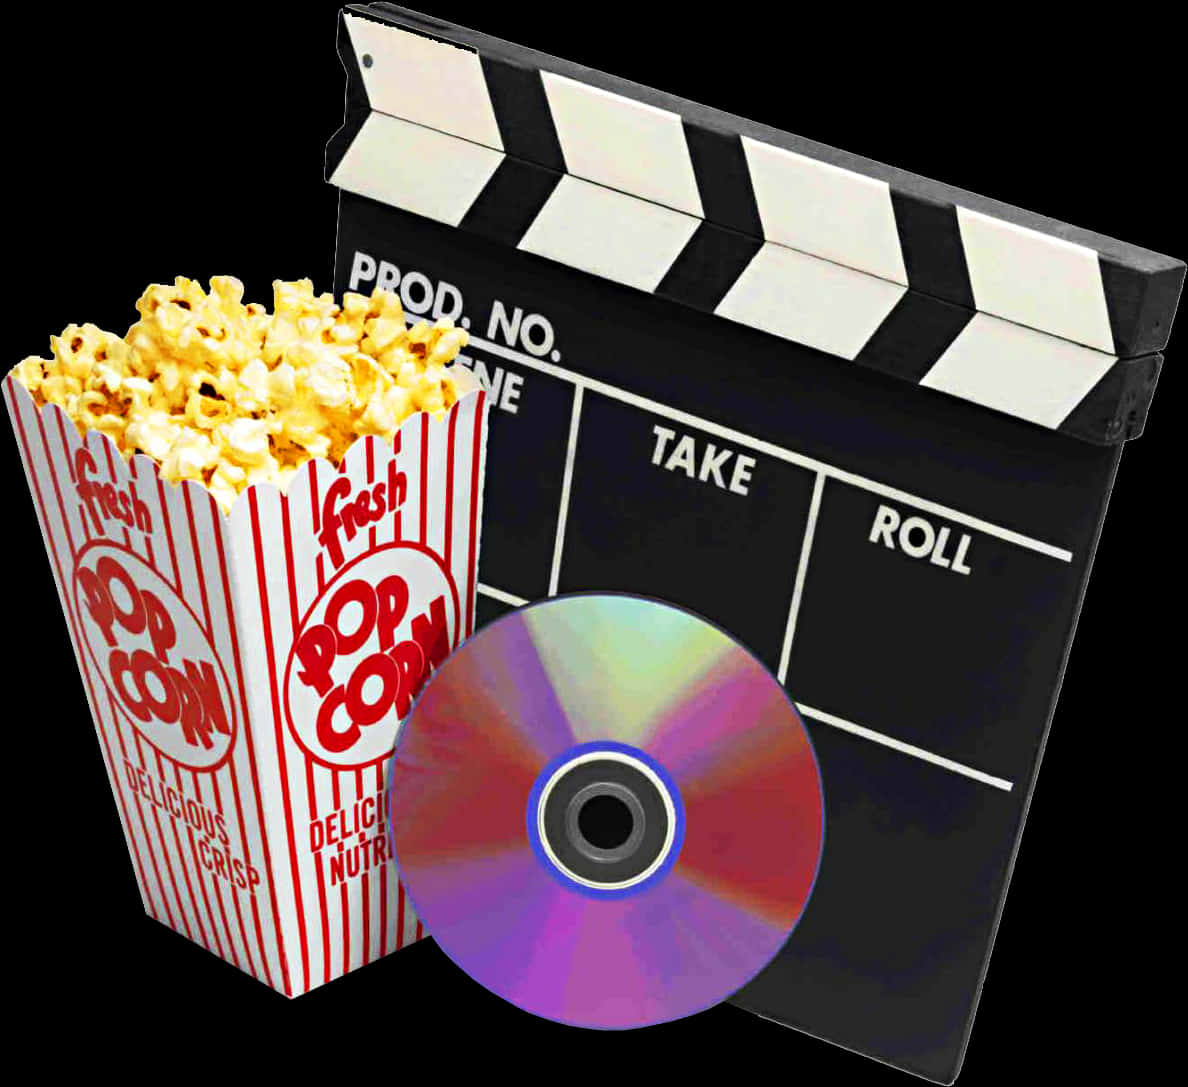 A Movie Clapper Board And A Box Of Popcorn